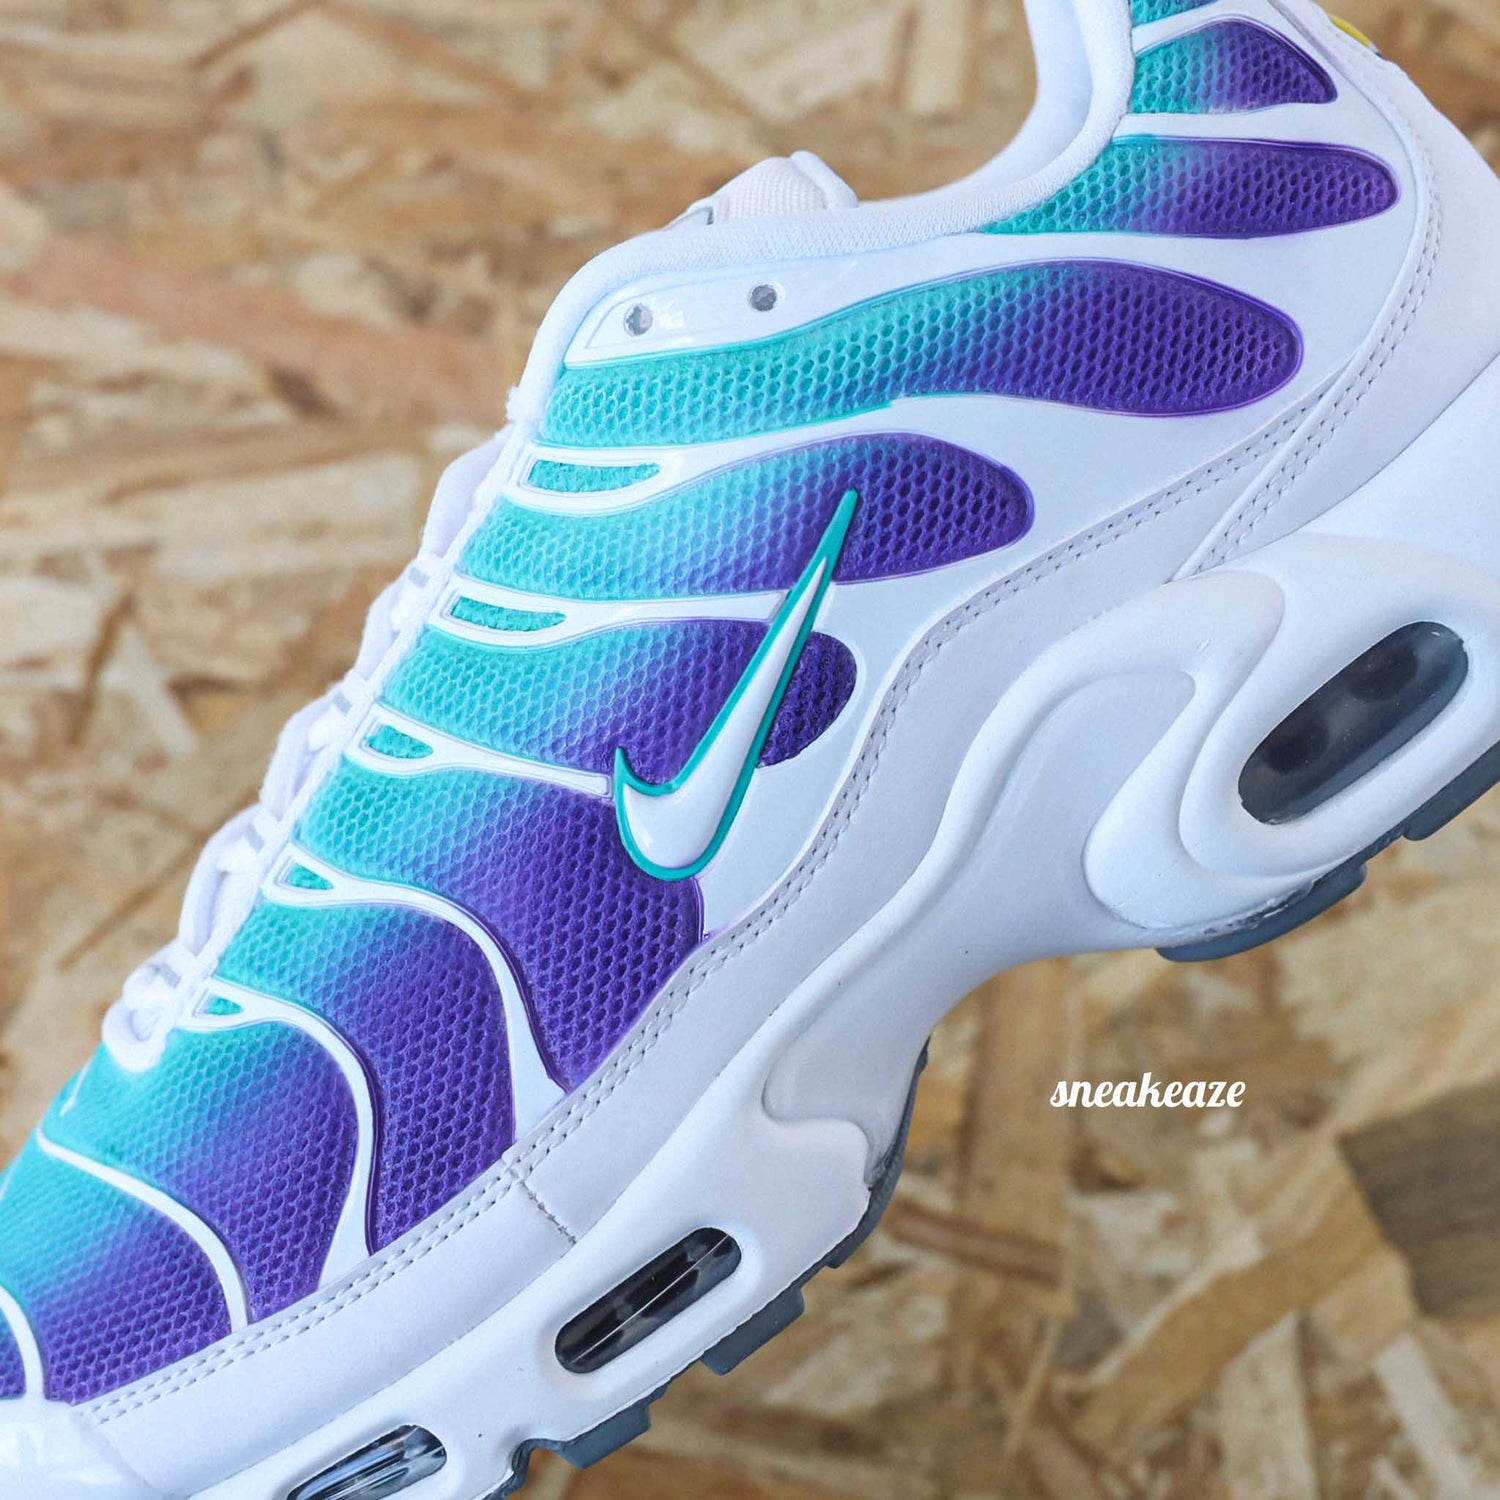 Sneakers Nike Air Max Plus tuned (TN) custom aqua Purple sneakeaze custom skz